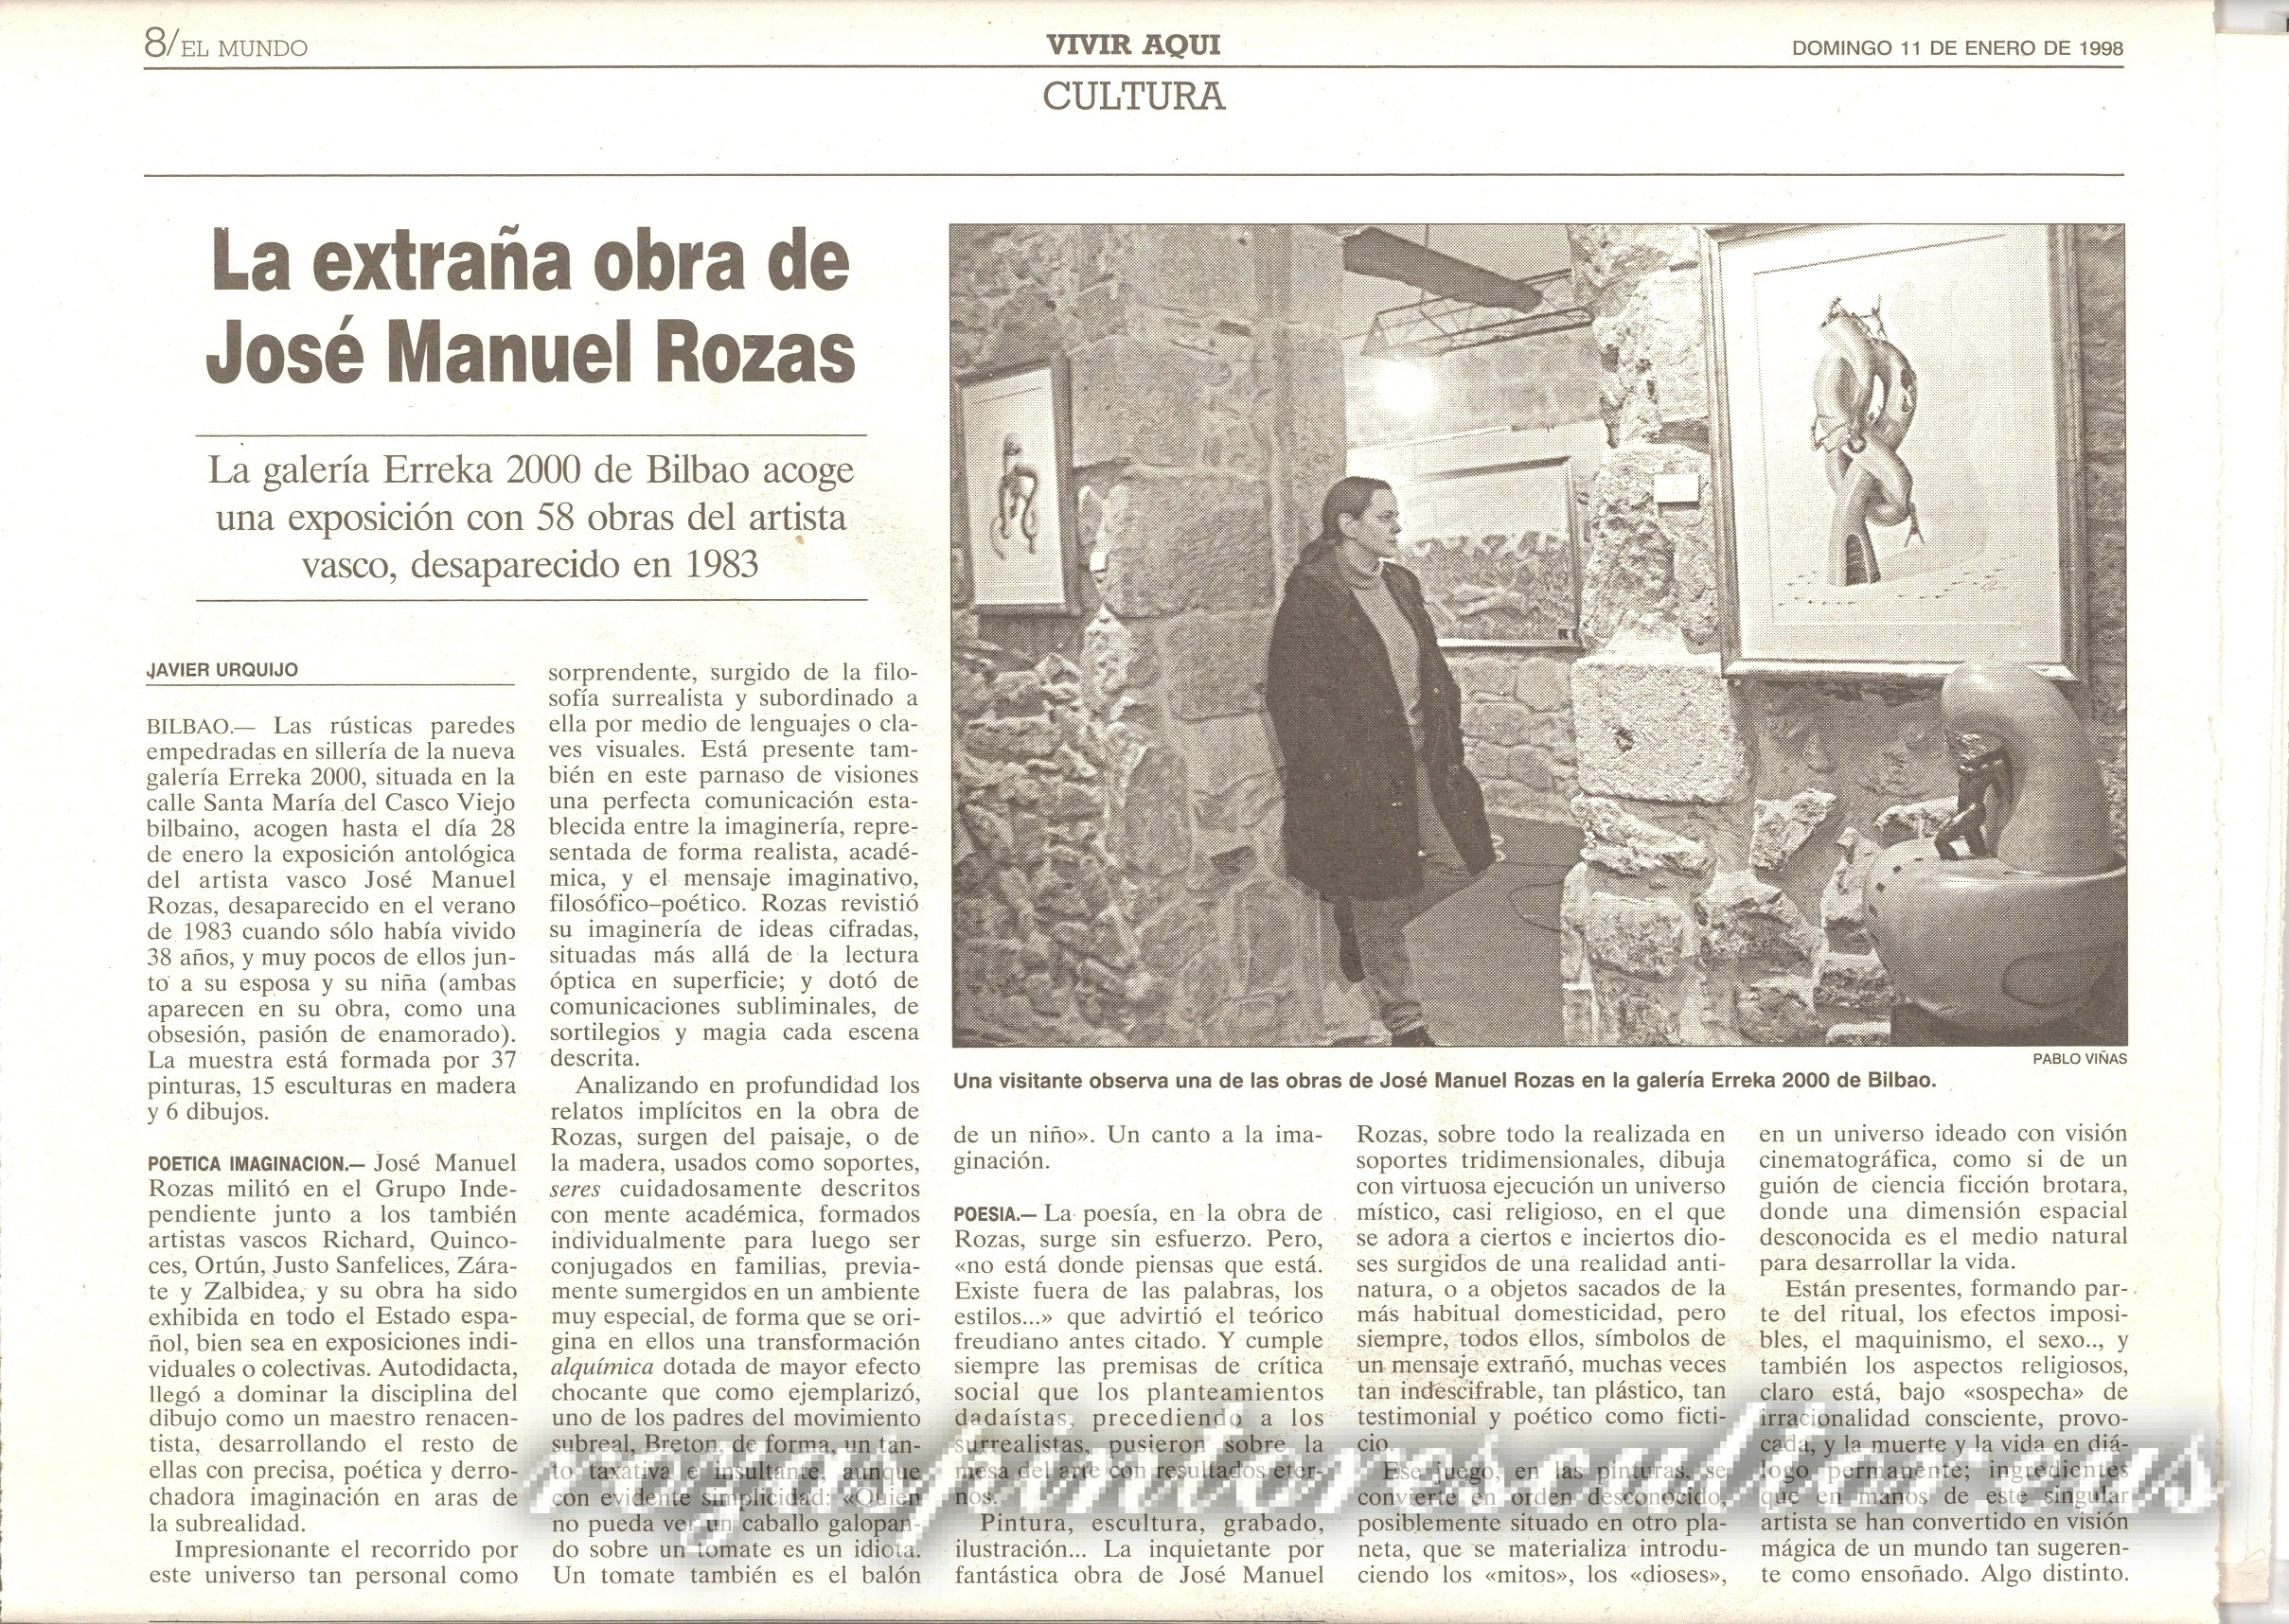 1998 El Mundo – The strange work of Jose Manuel Rozas – Javier Urquijo